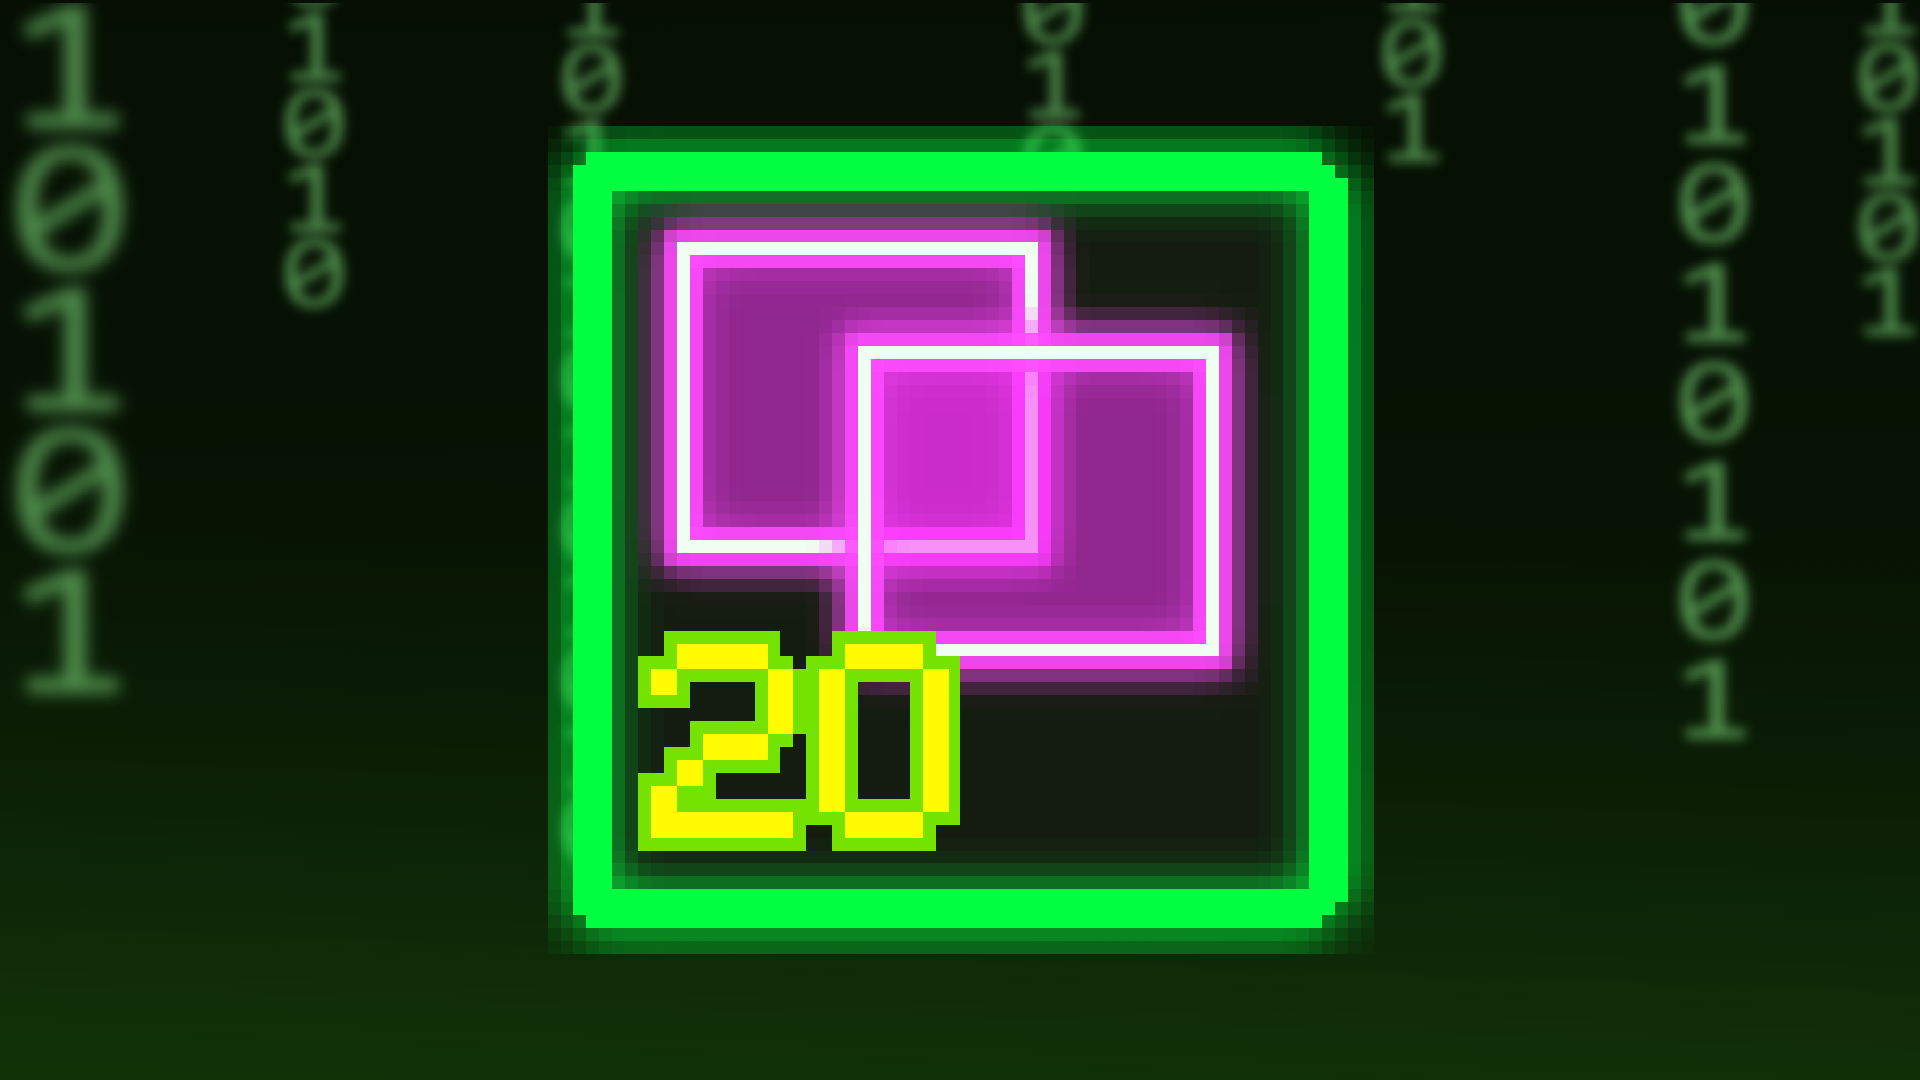 Killer squares level 2